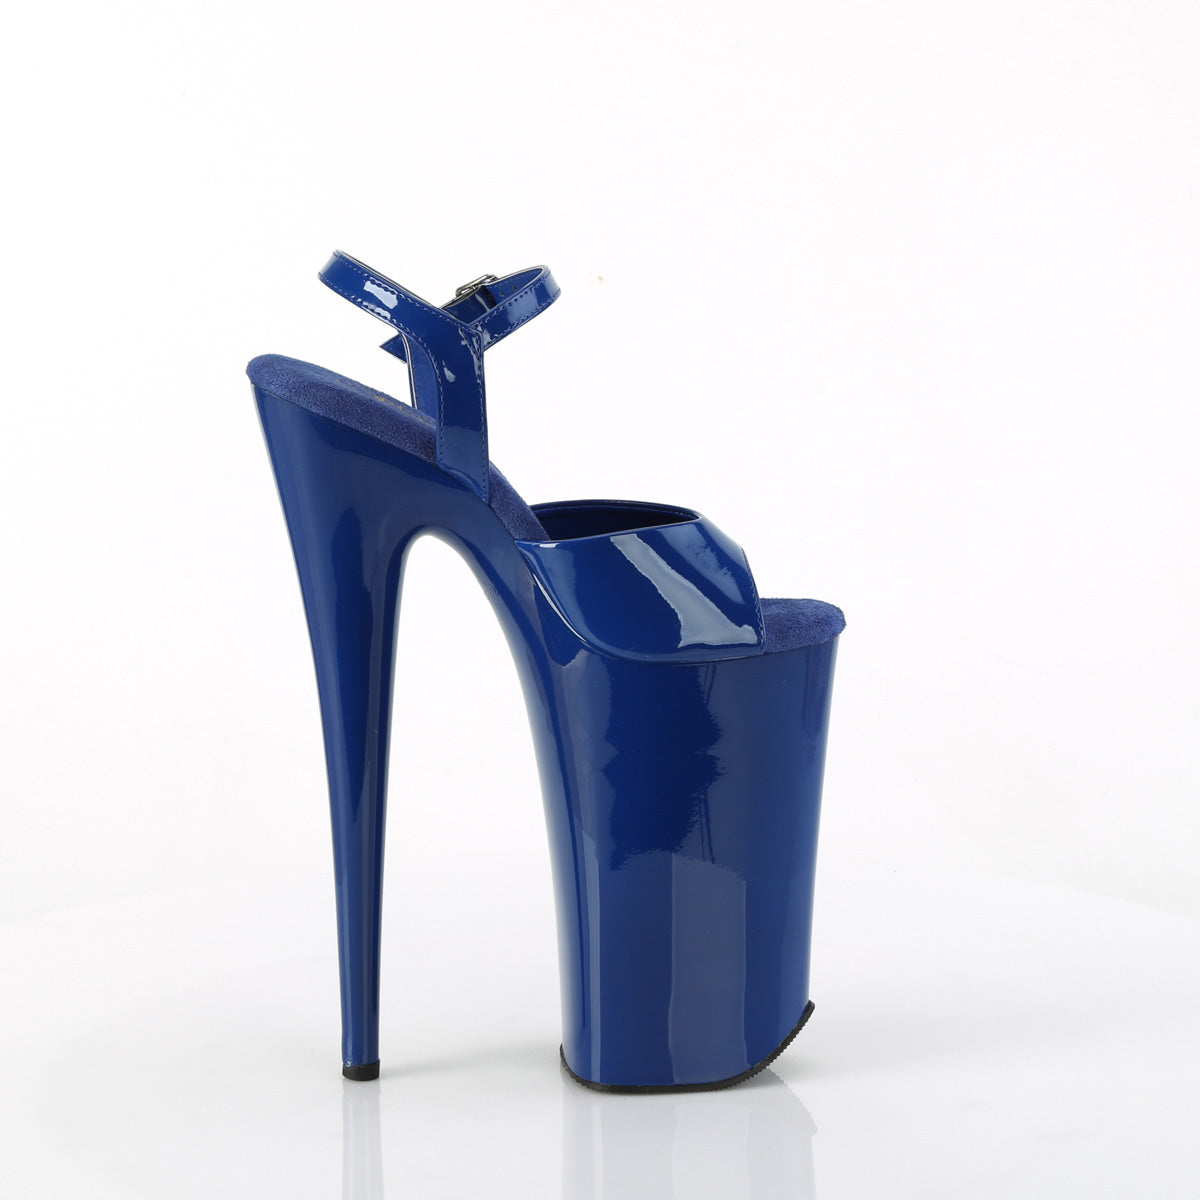 10 Inch Heel BEYOND-009 Royal Blue Patent